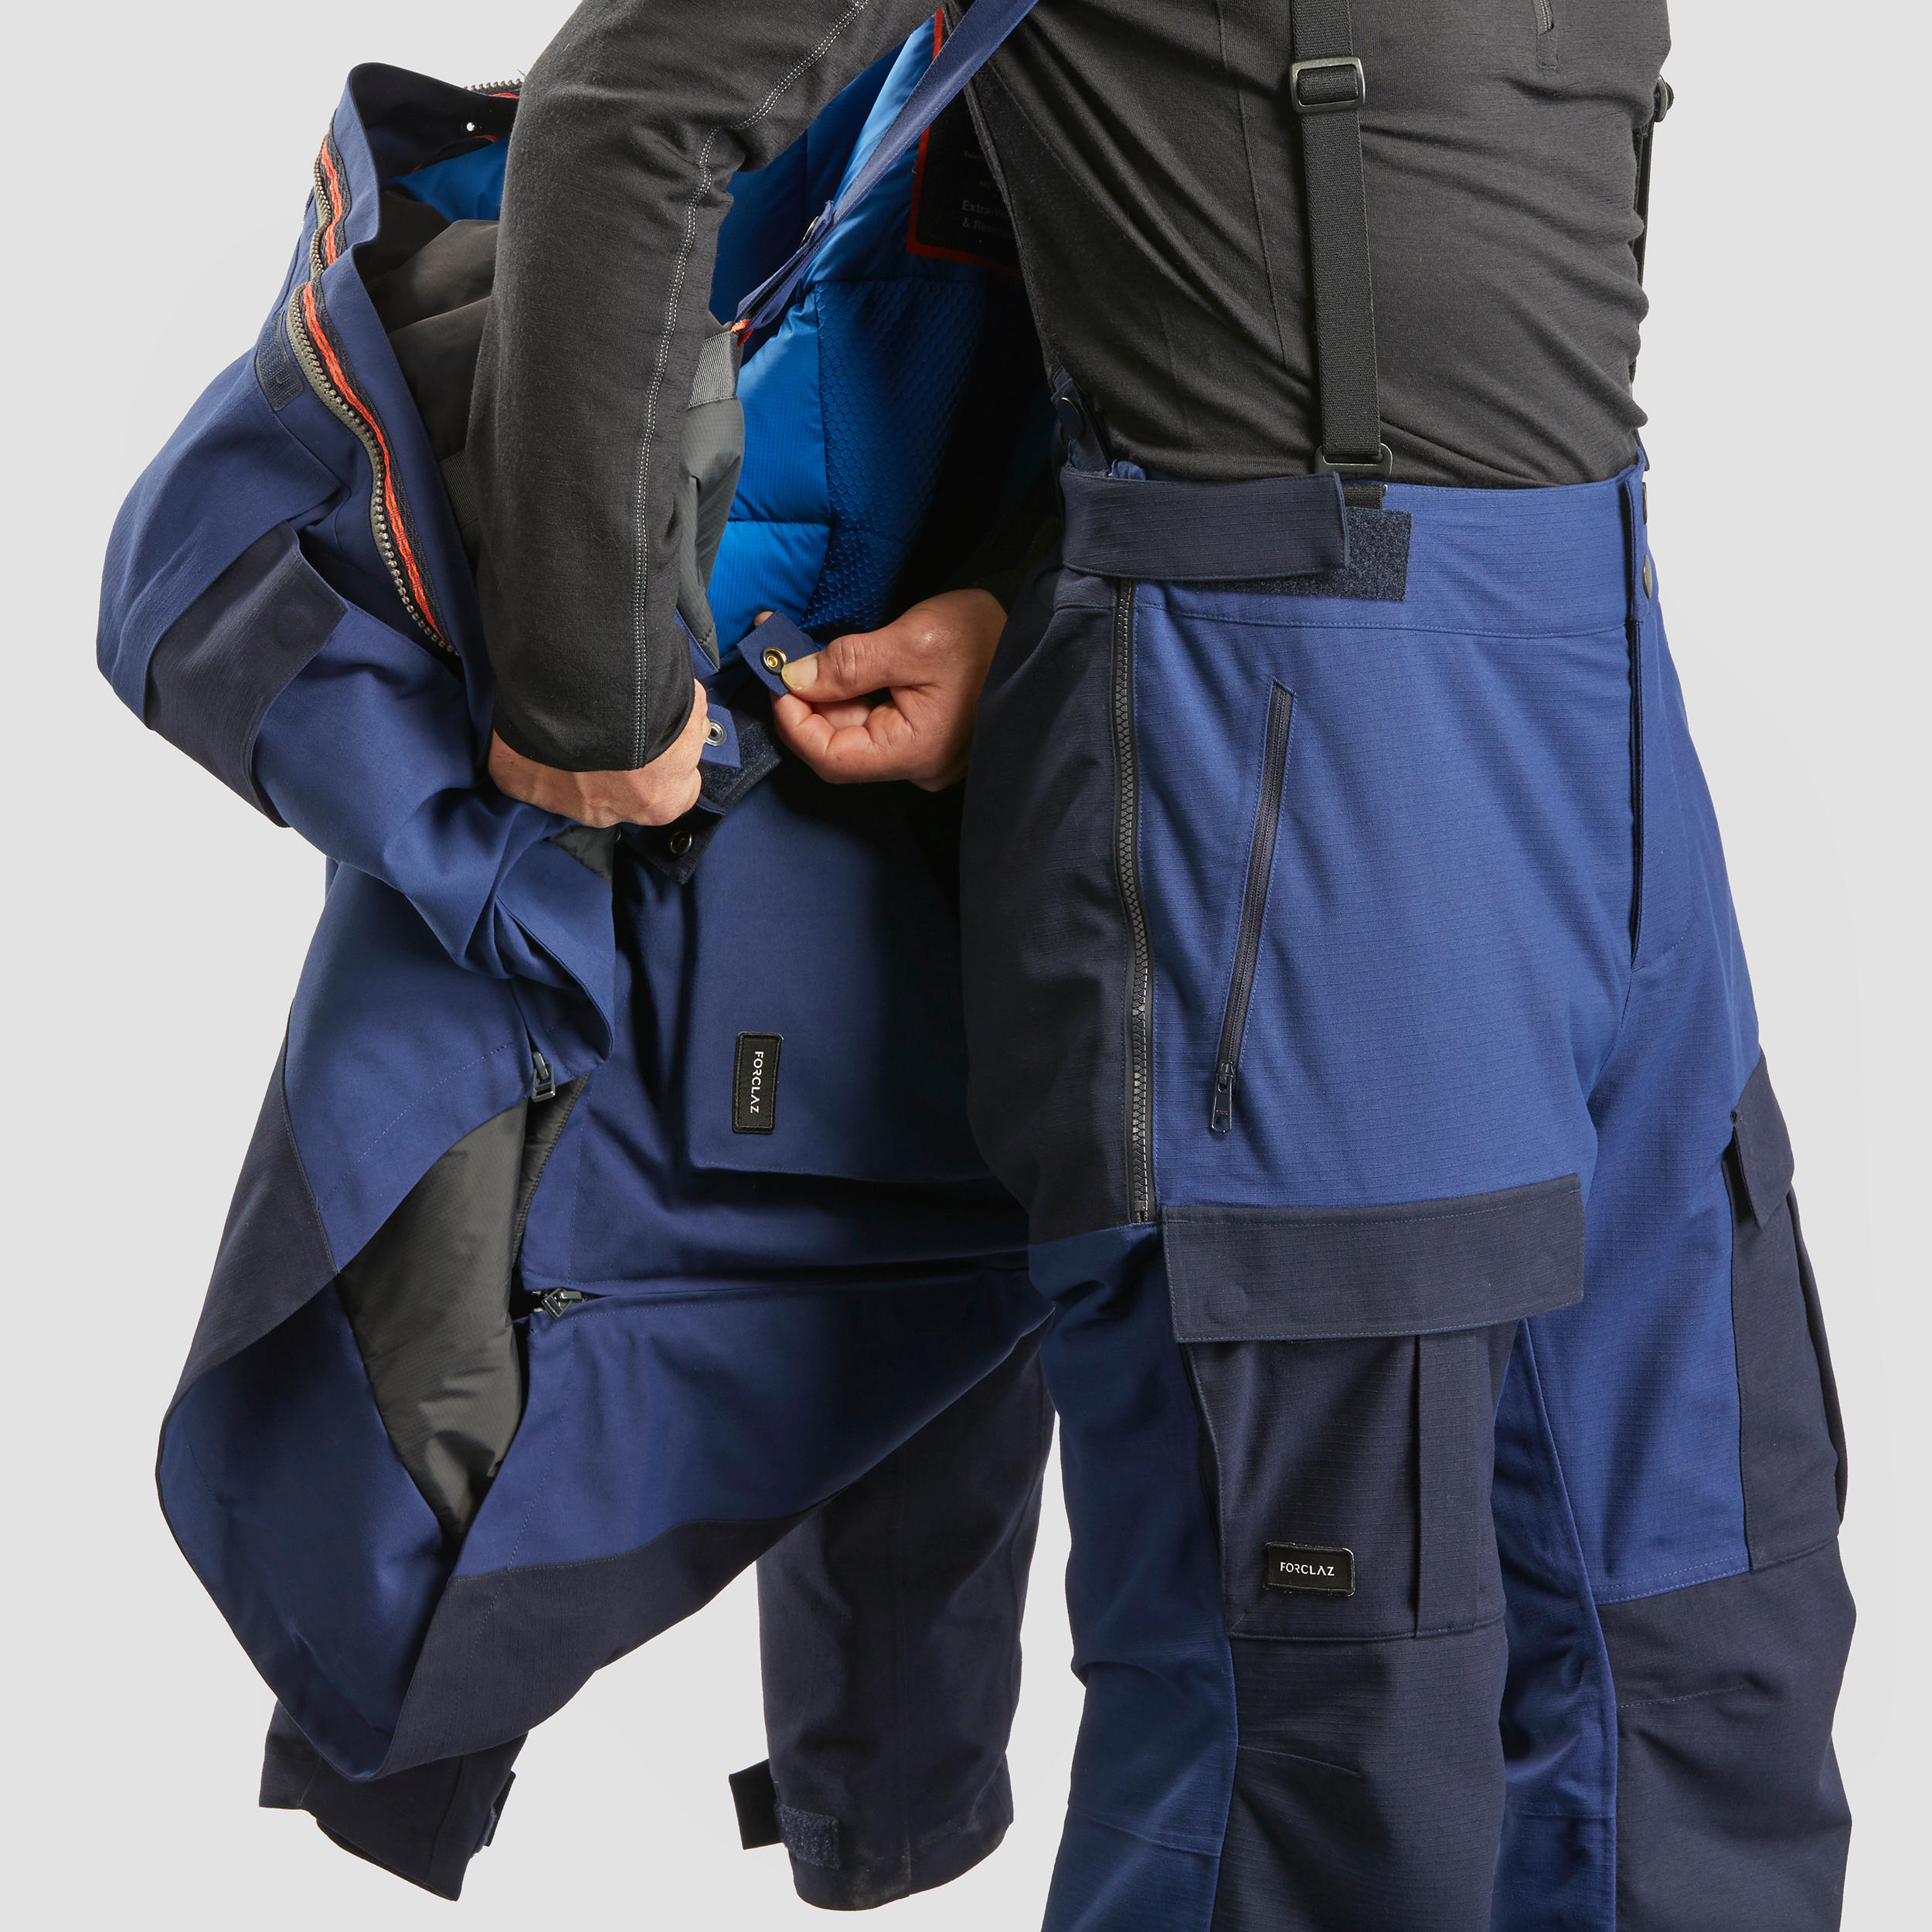 Warm and waterproof trekking trousers - Artic 900 - unisex 19/19